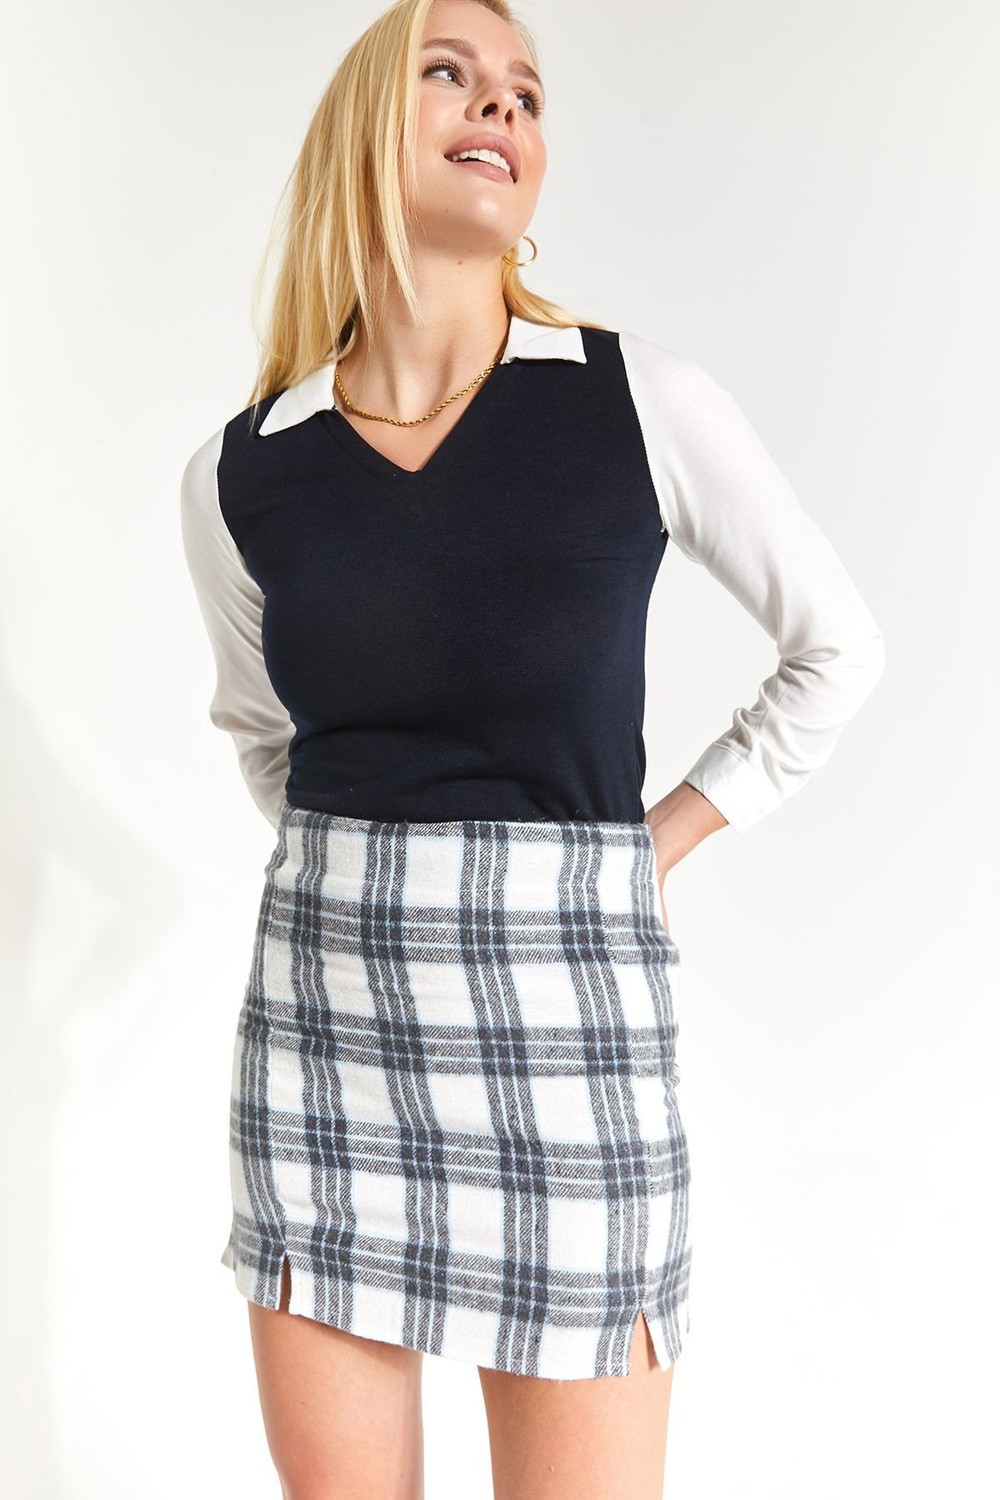 armonika Women's Baby Blue Checkered Stitched Slit Mini Skirt